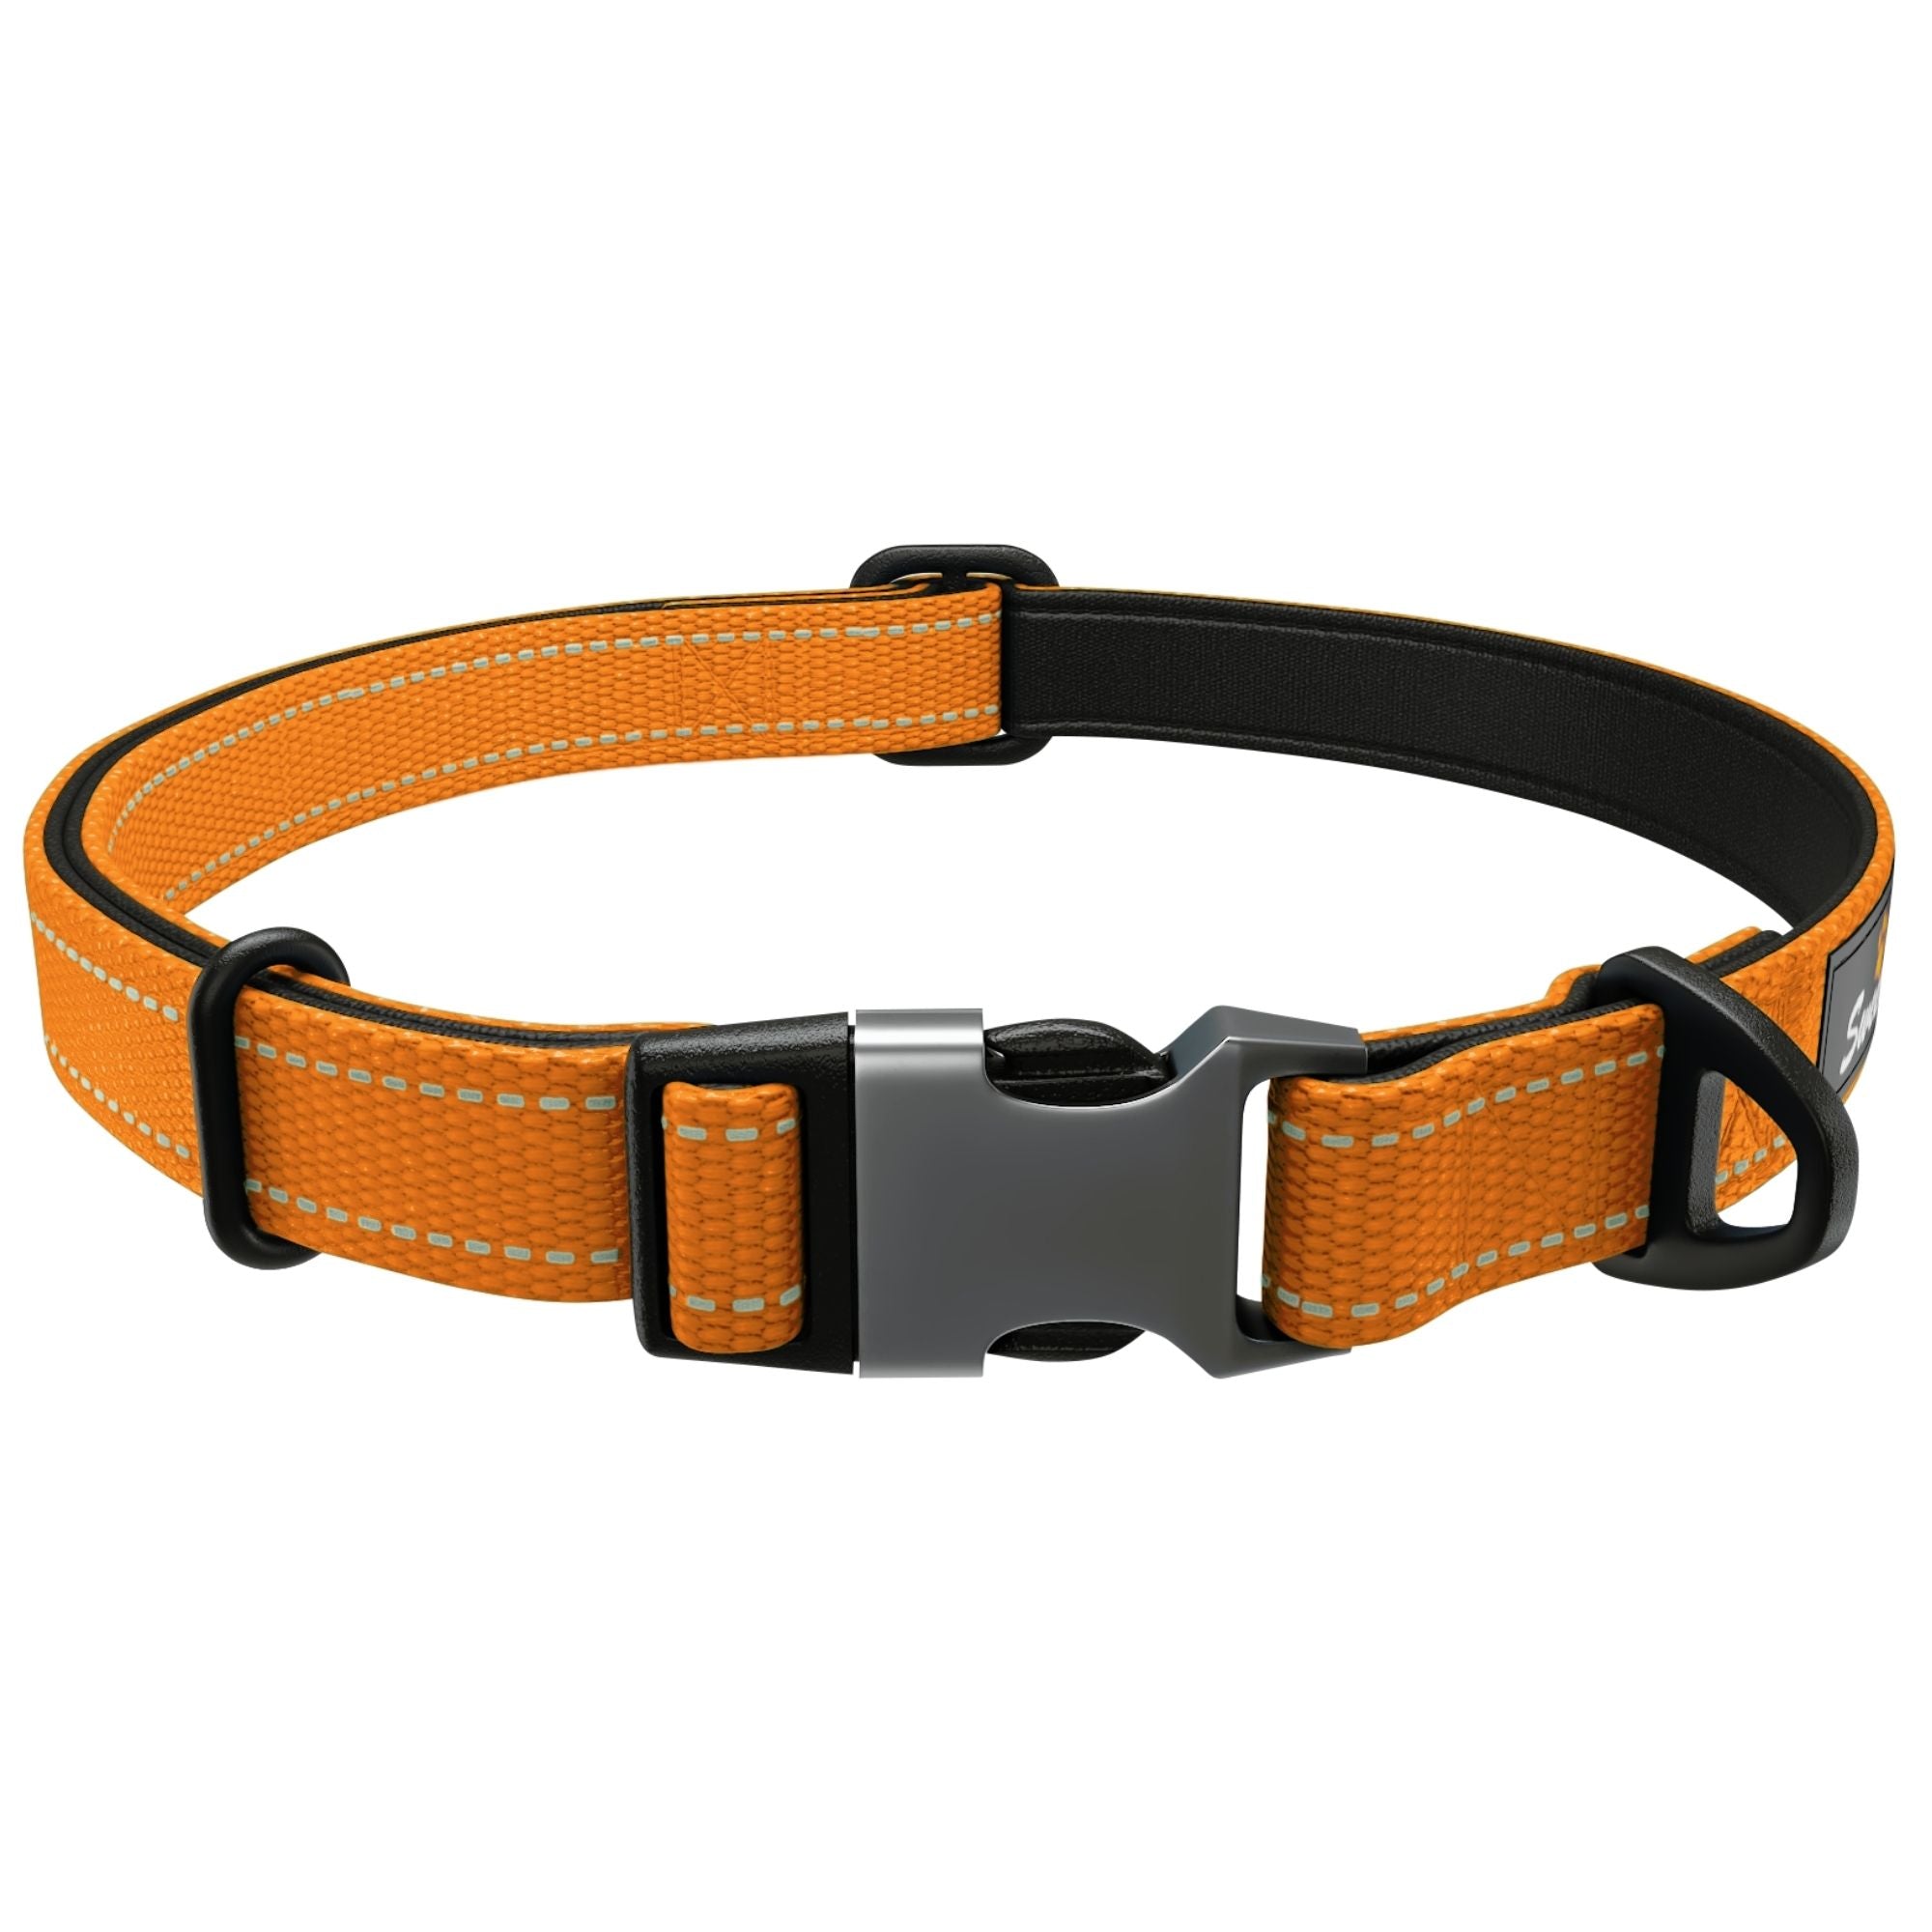 Neoprene Padded Dog Collar - Orange - Sweetie